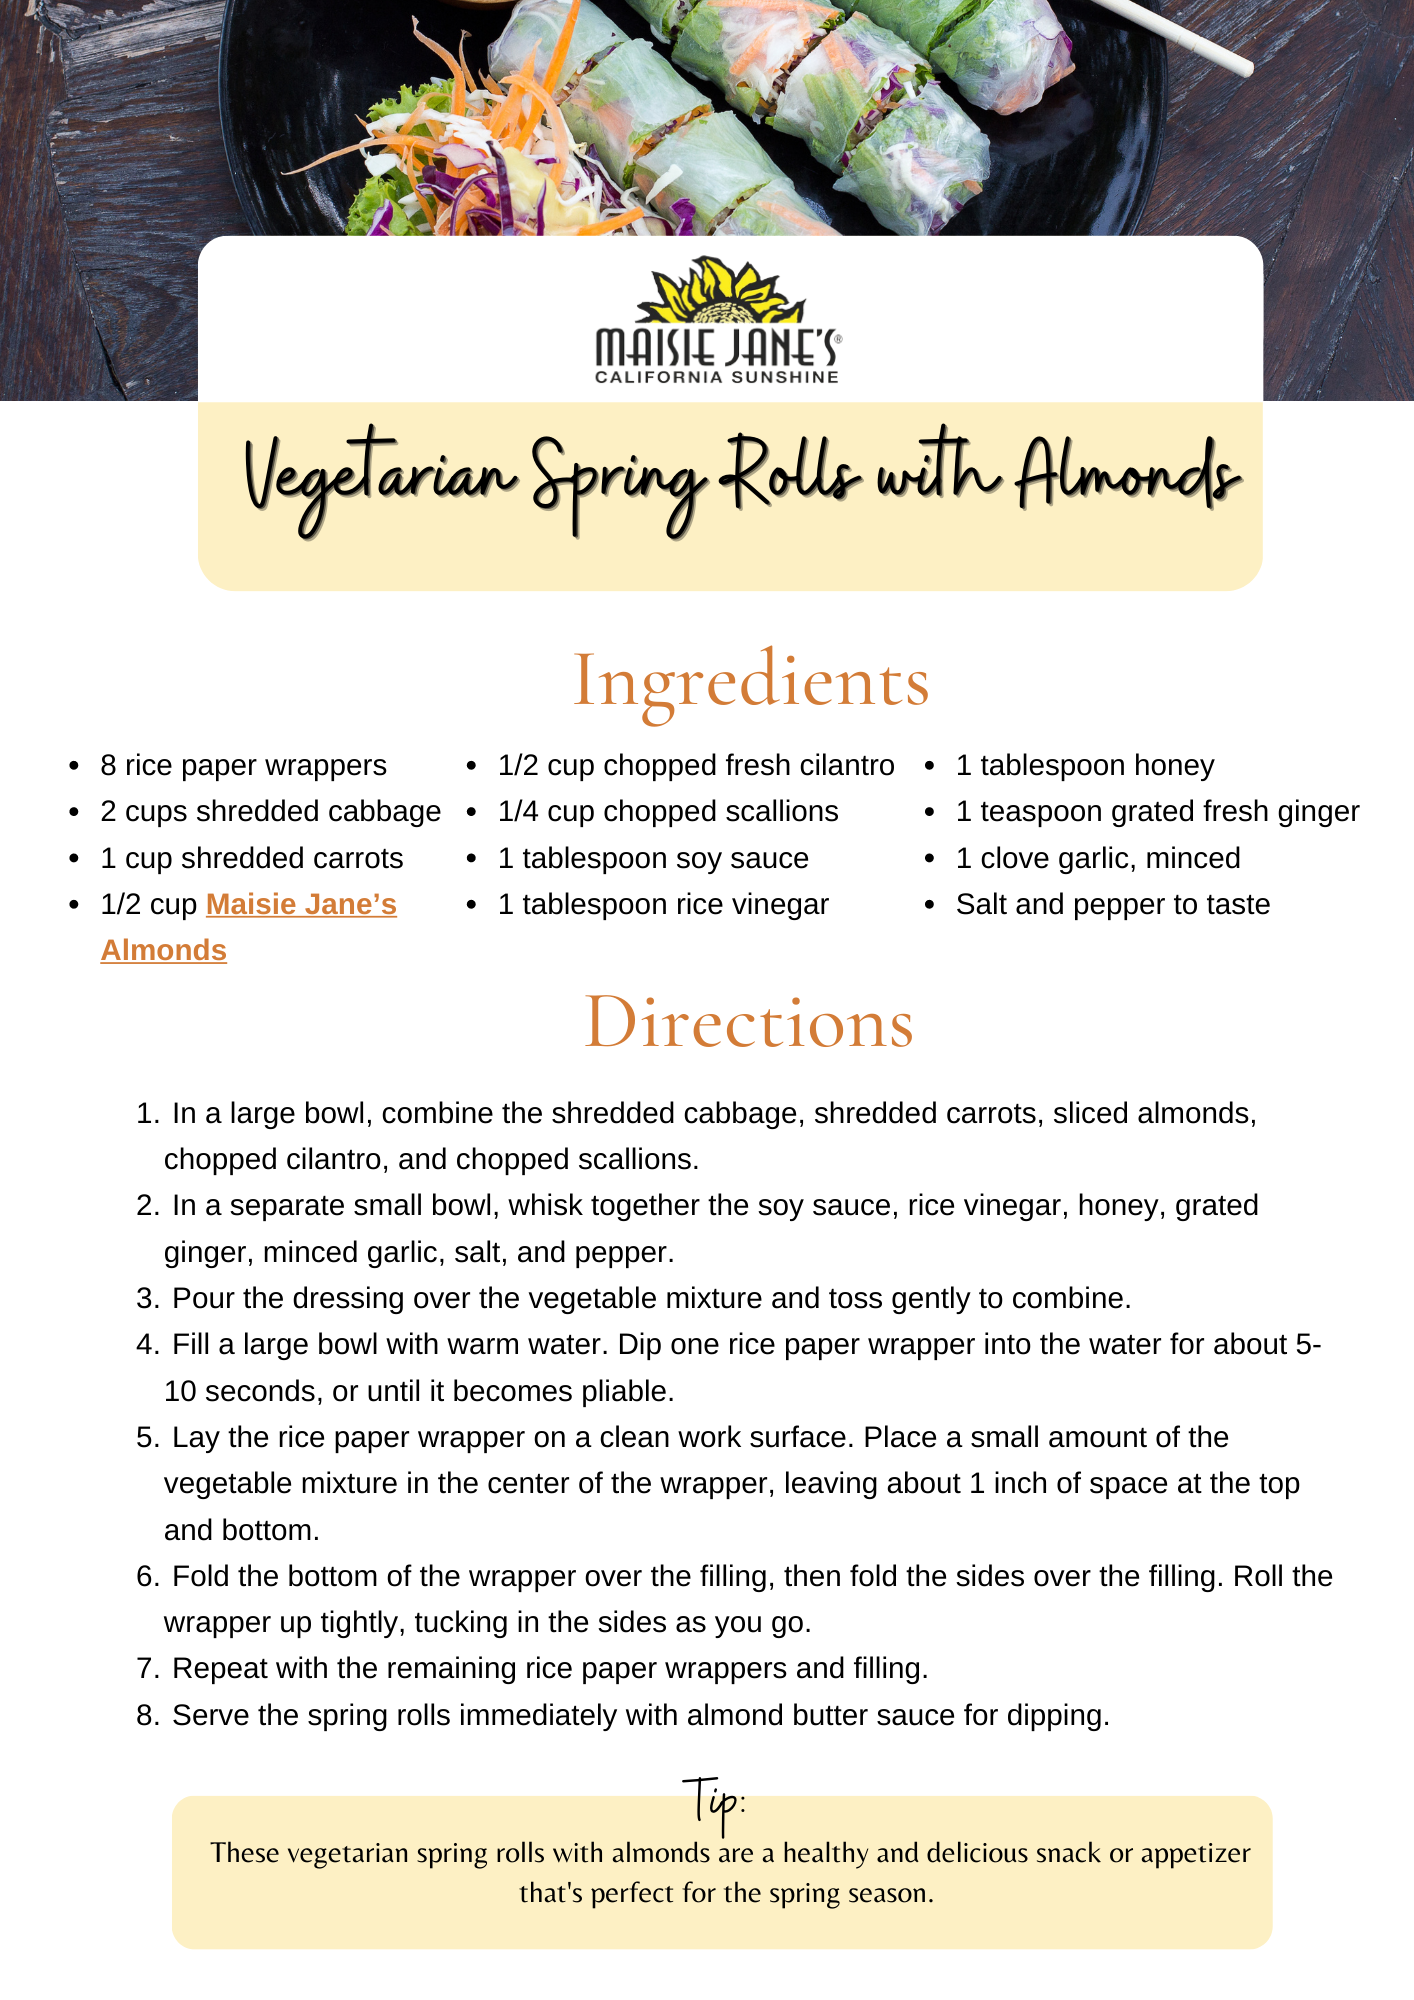 Maisie Jane's Vegetarian Spring Rolls with Almonds Recipe Card